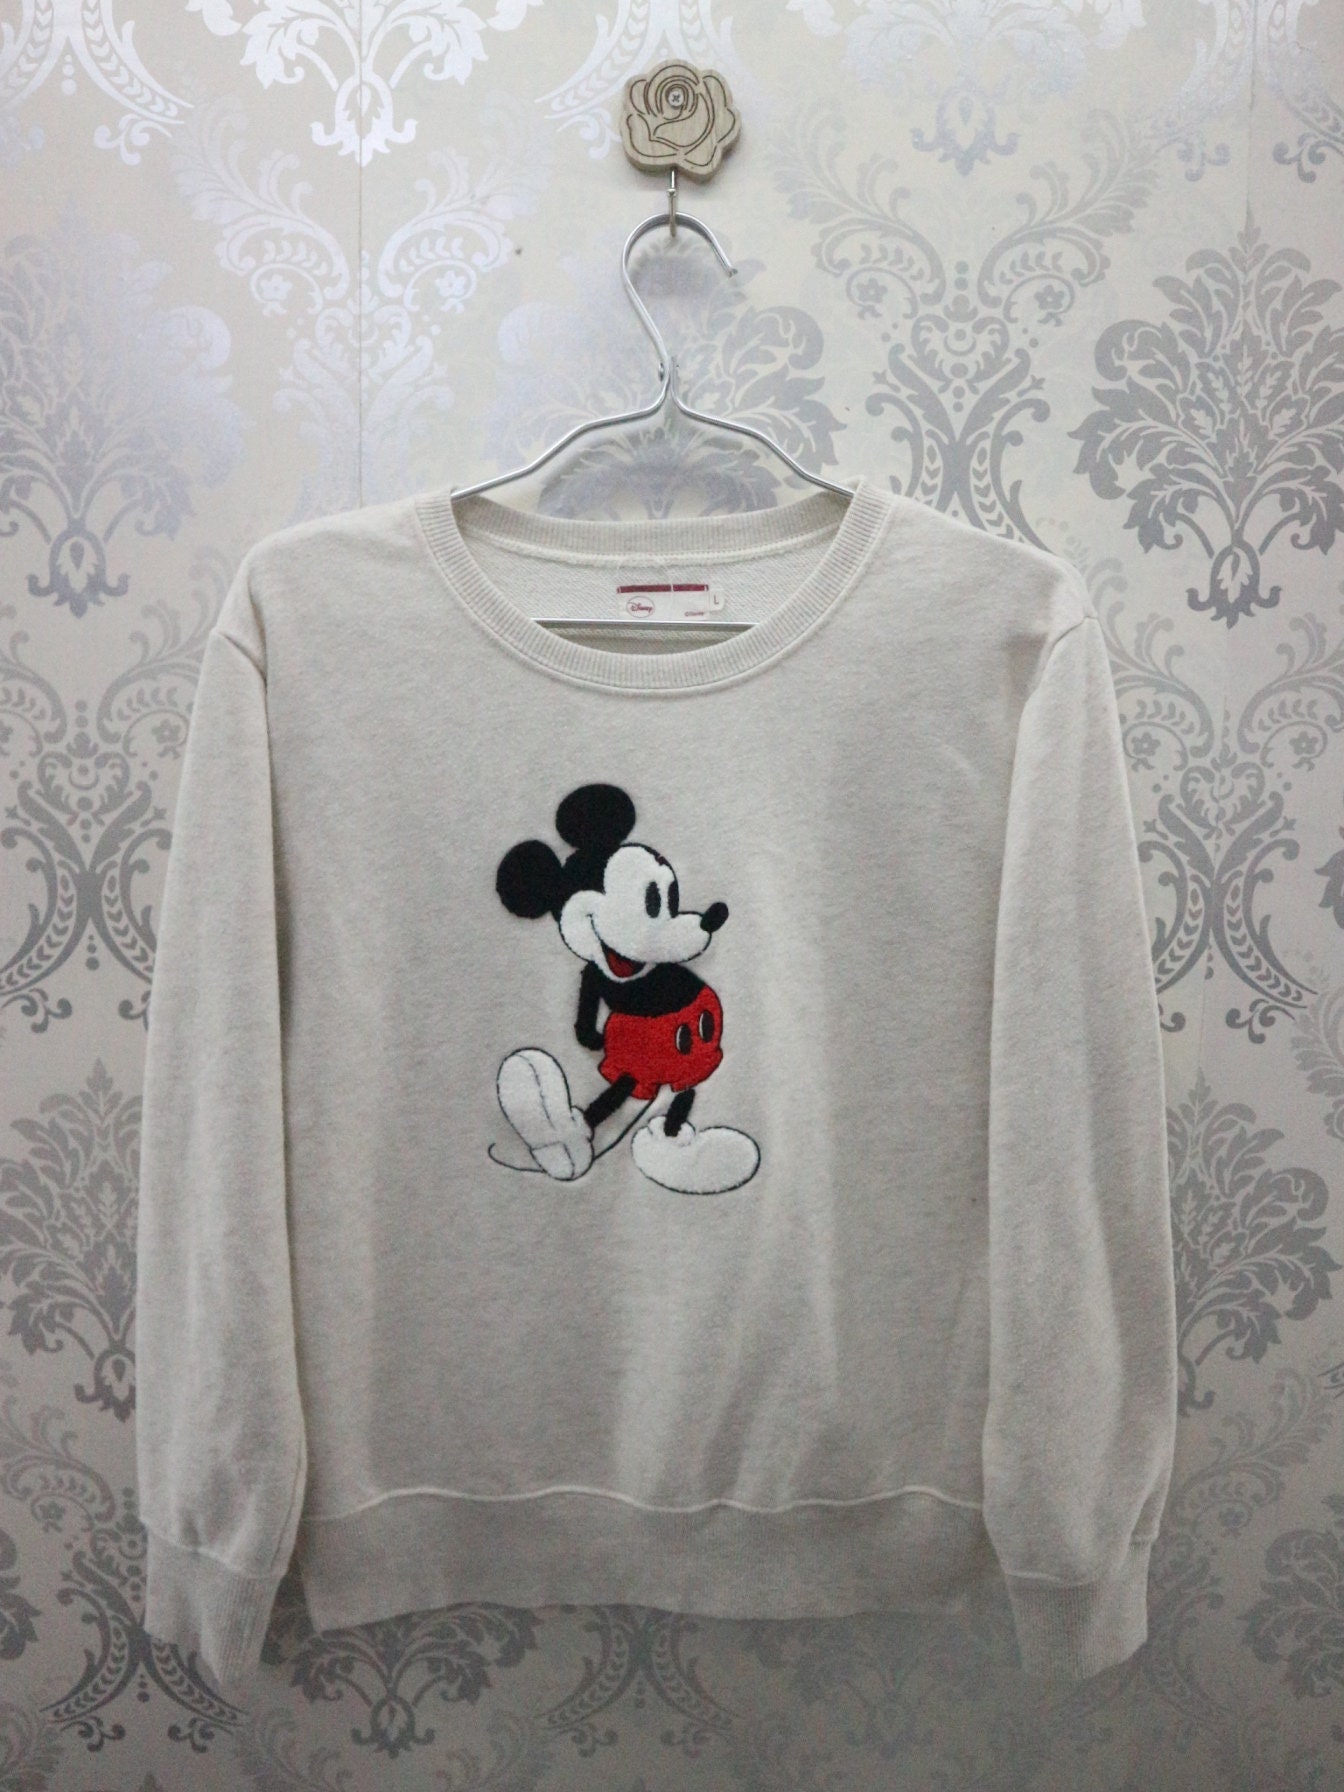 Vintage Mickey Mouse Hoodies Sweatshirt Big Logo Funny Cartoon Street Wear Pull Over Sweater Size M